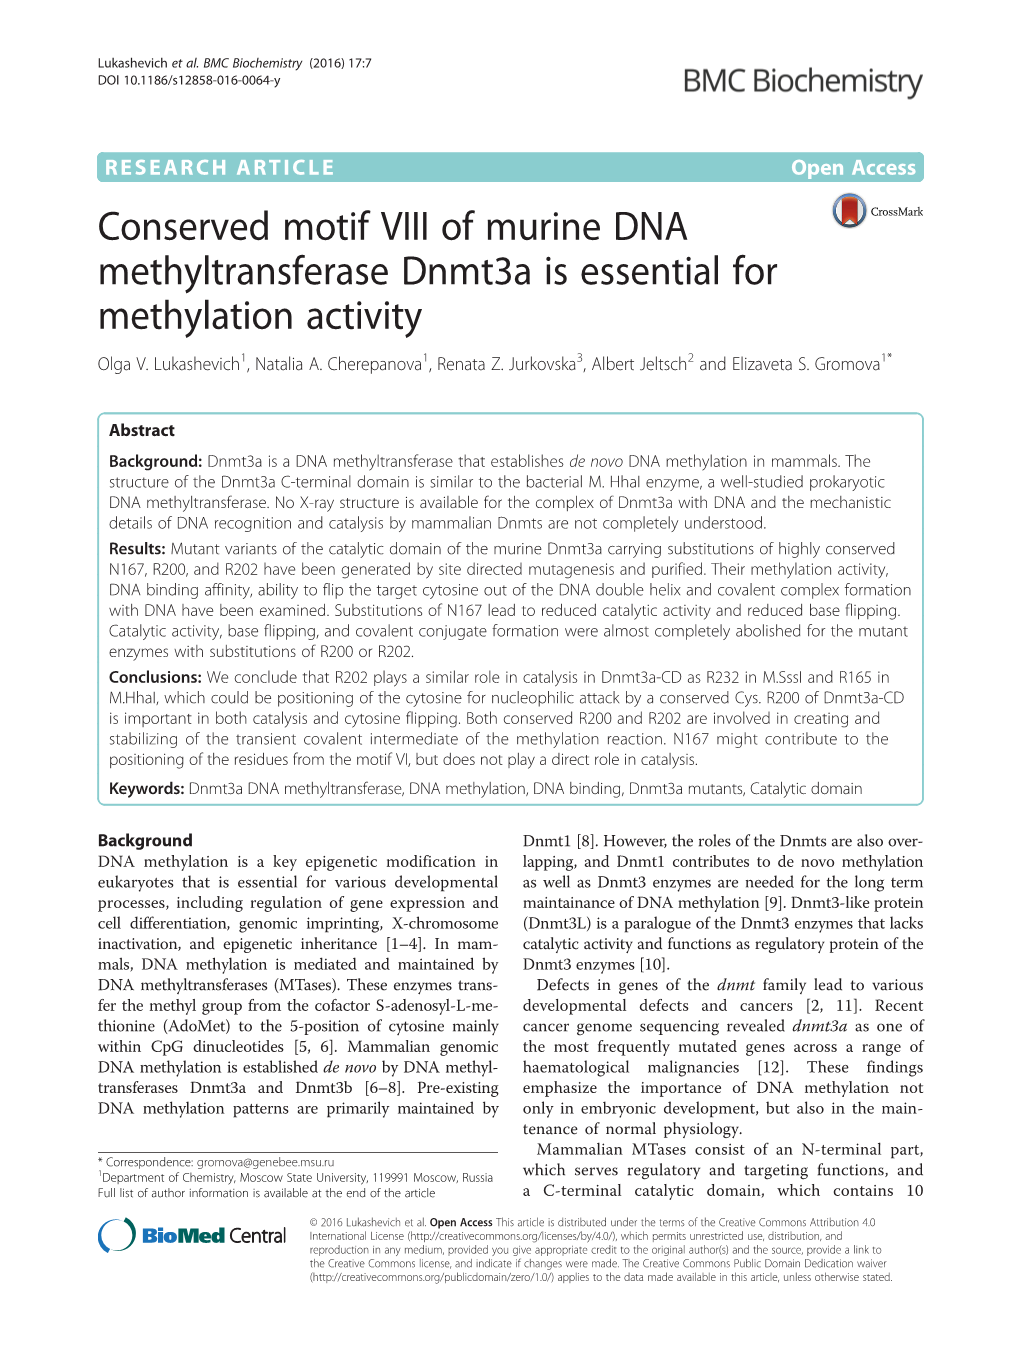 Conserved Motif VIII of Murine DNA Methyltransferase Dnmt3a Is Essential for Methylation Activity Olga V